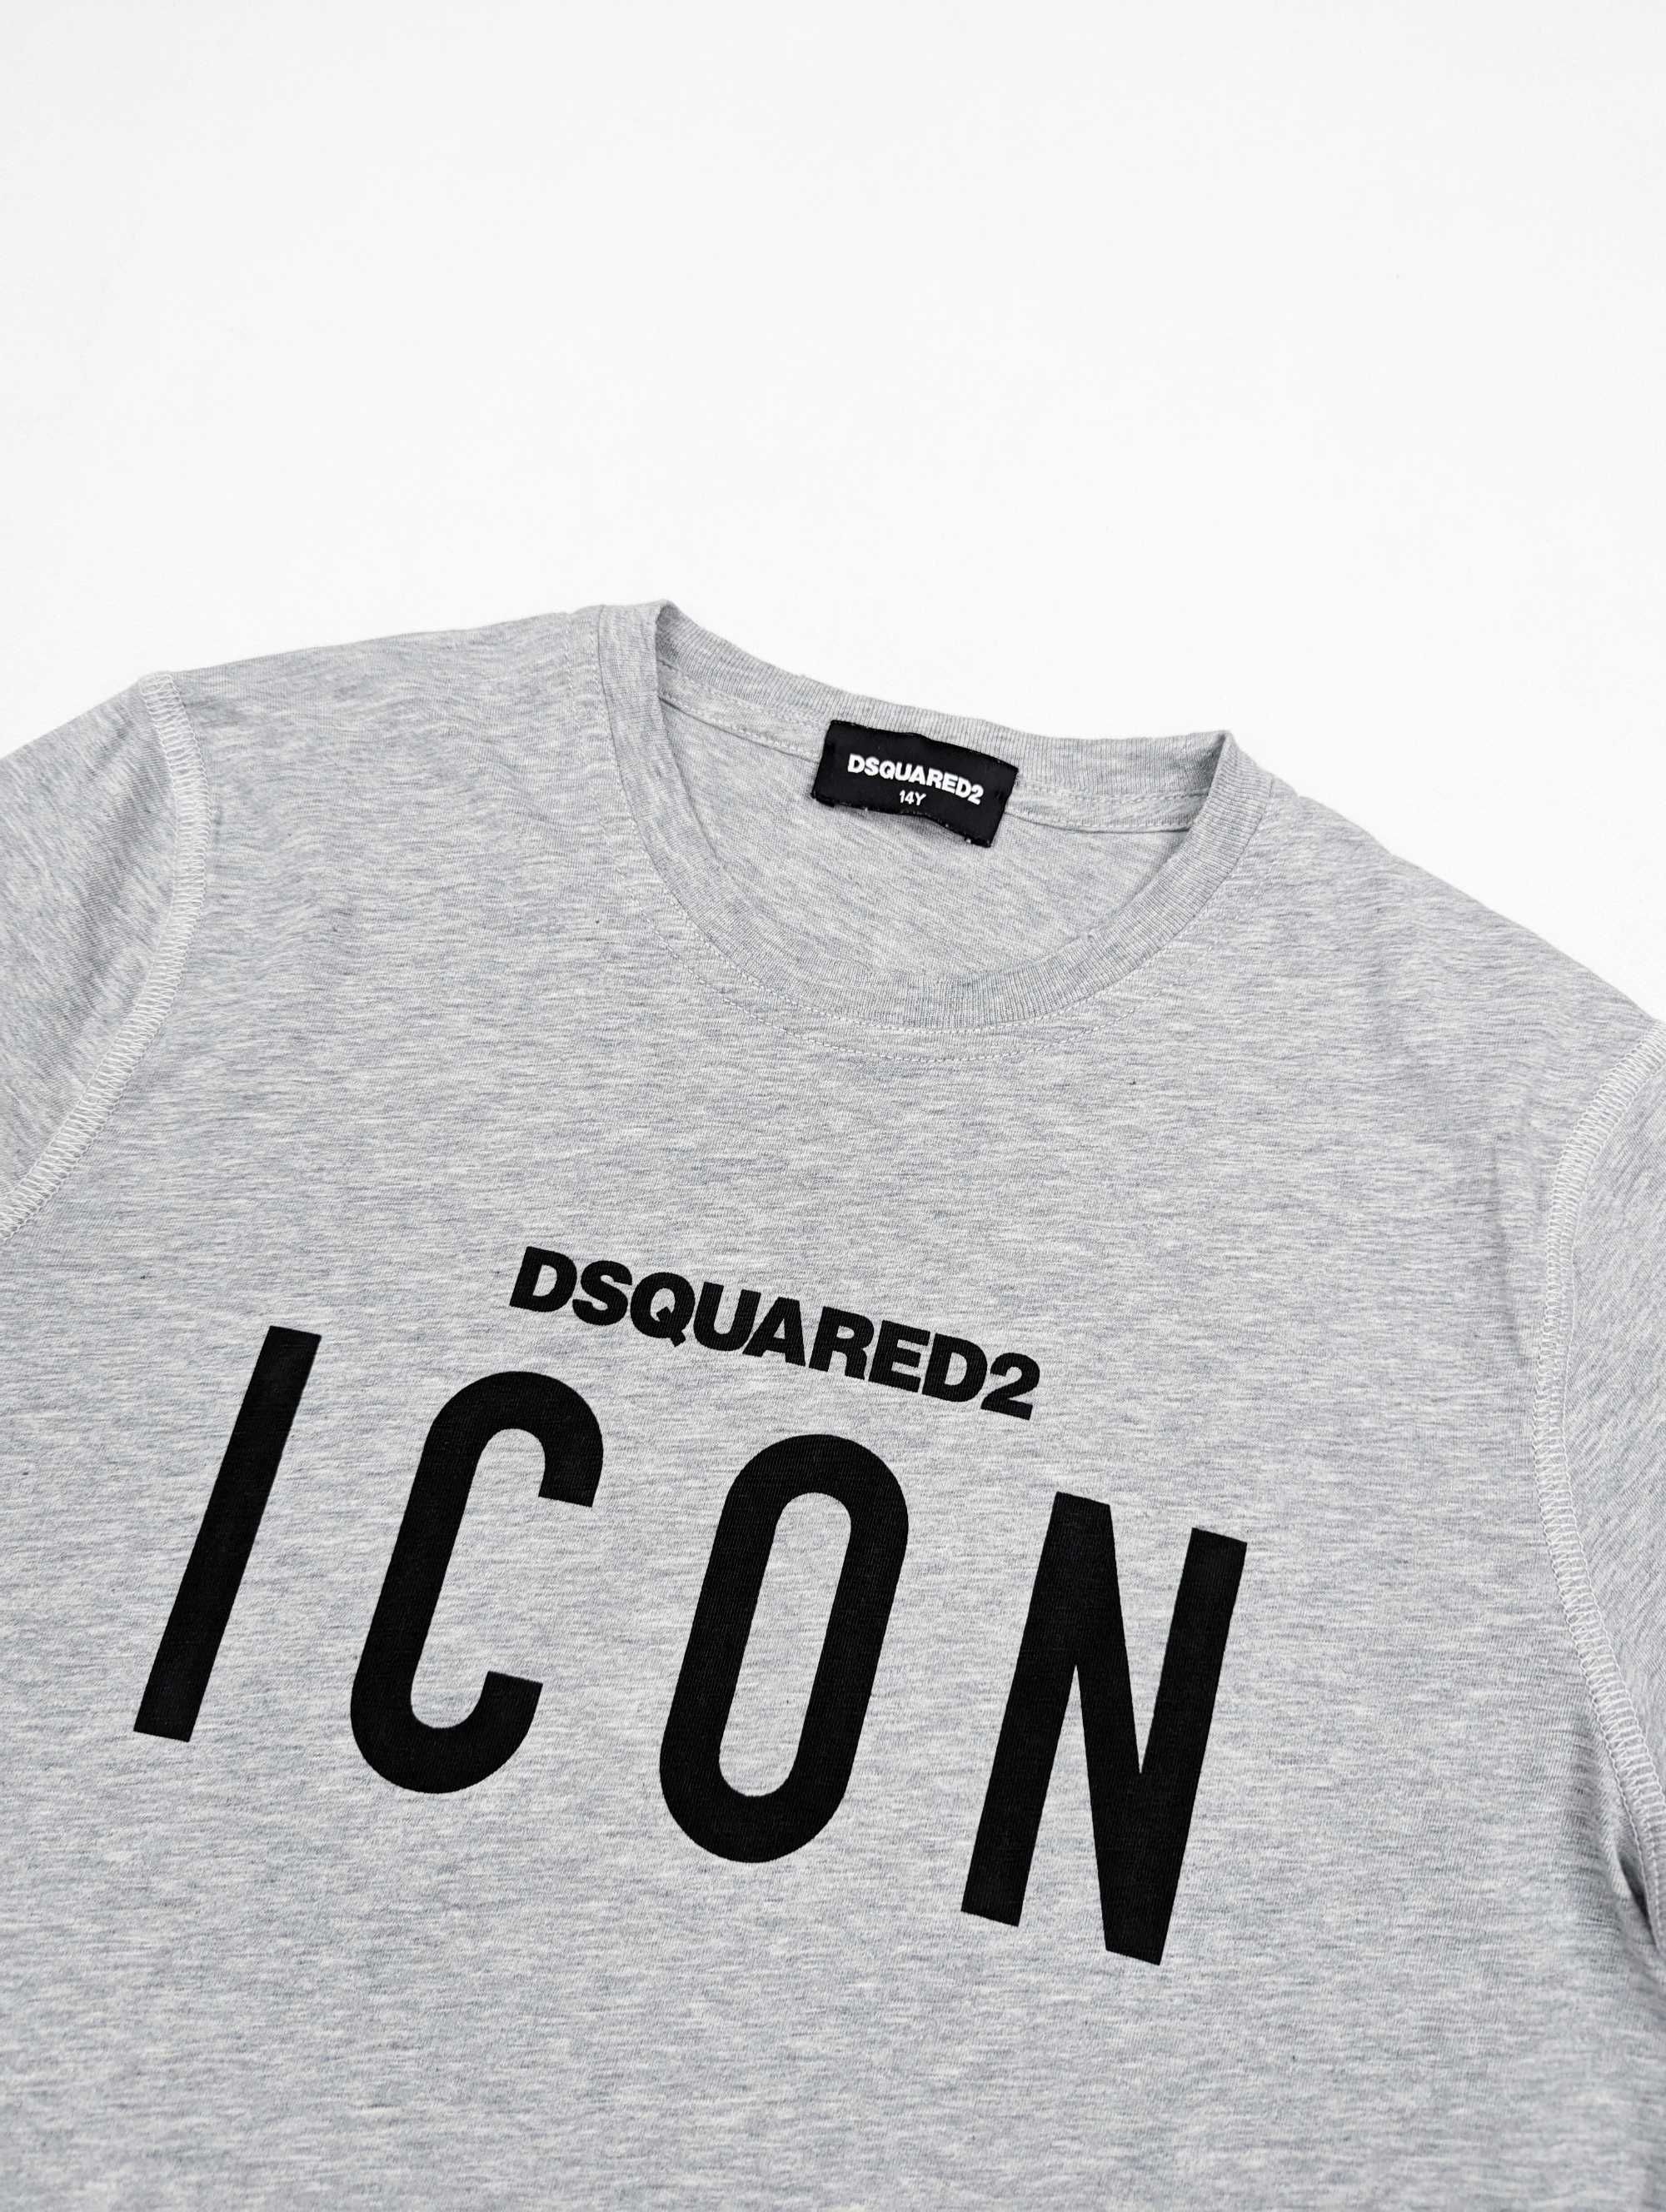 Dsquared2 szara koszulka t-shirt S logo